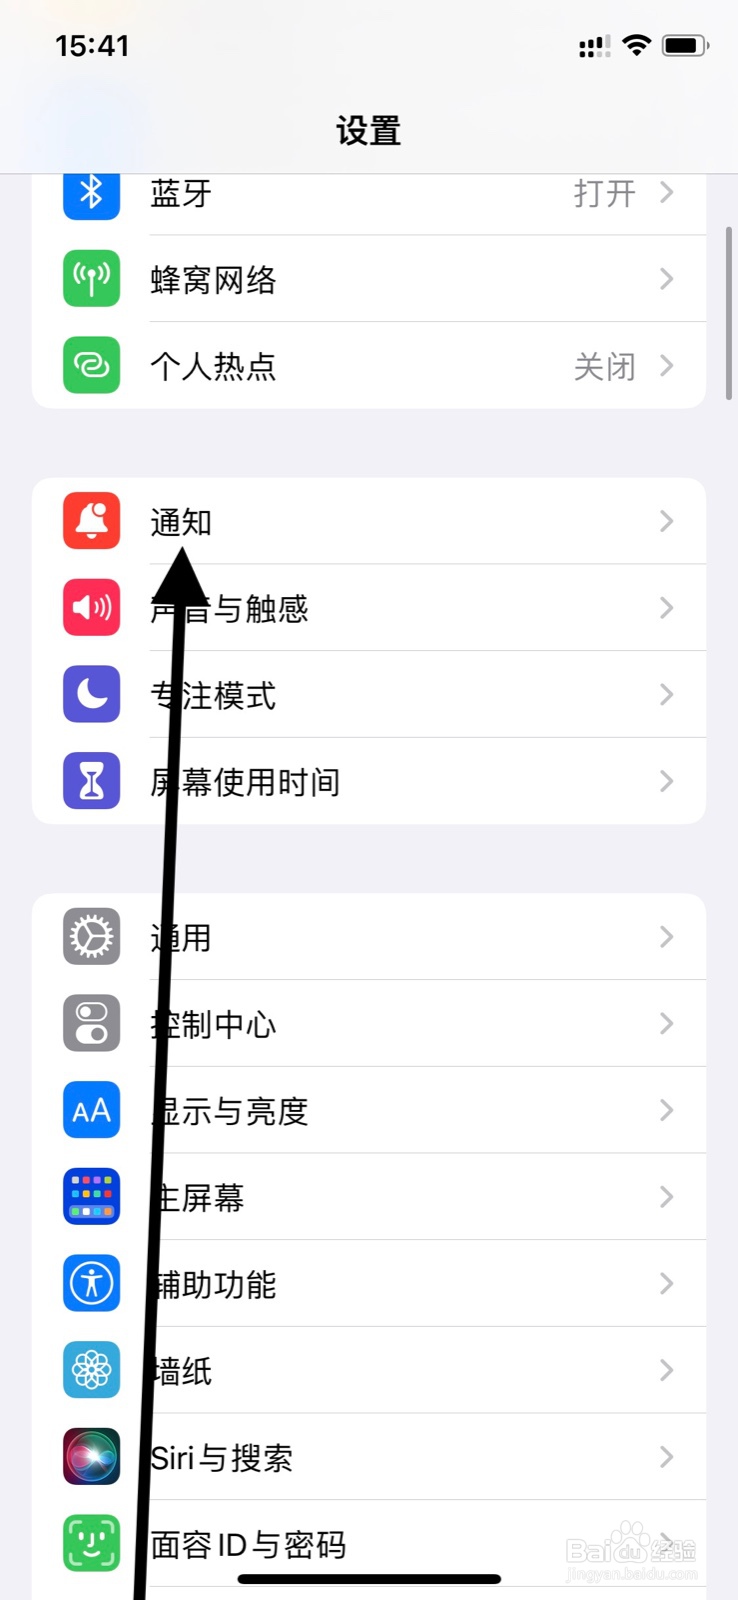 <b>iPhone锁定屏幕允许“欢乐斗地主”app显示通知</b>